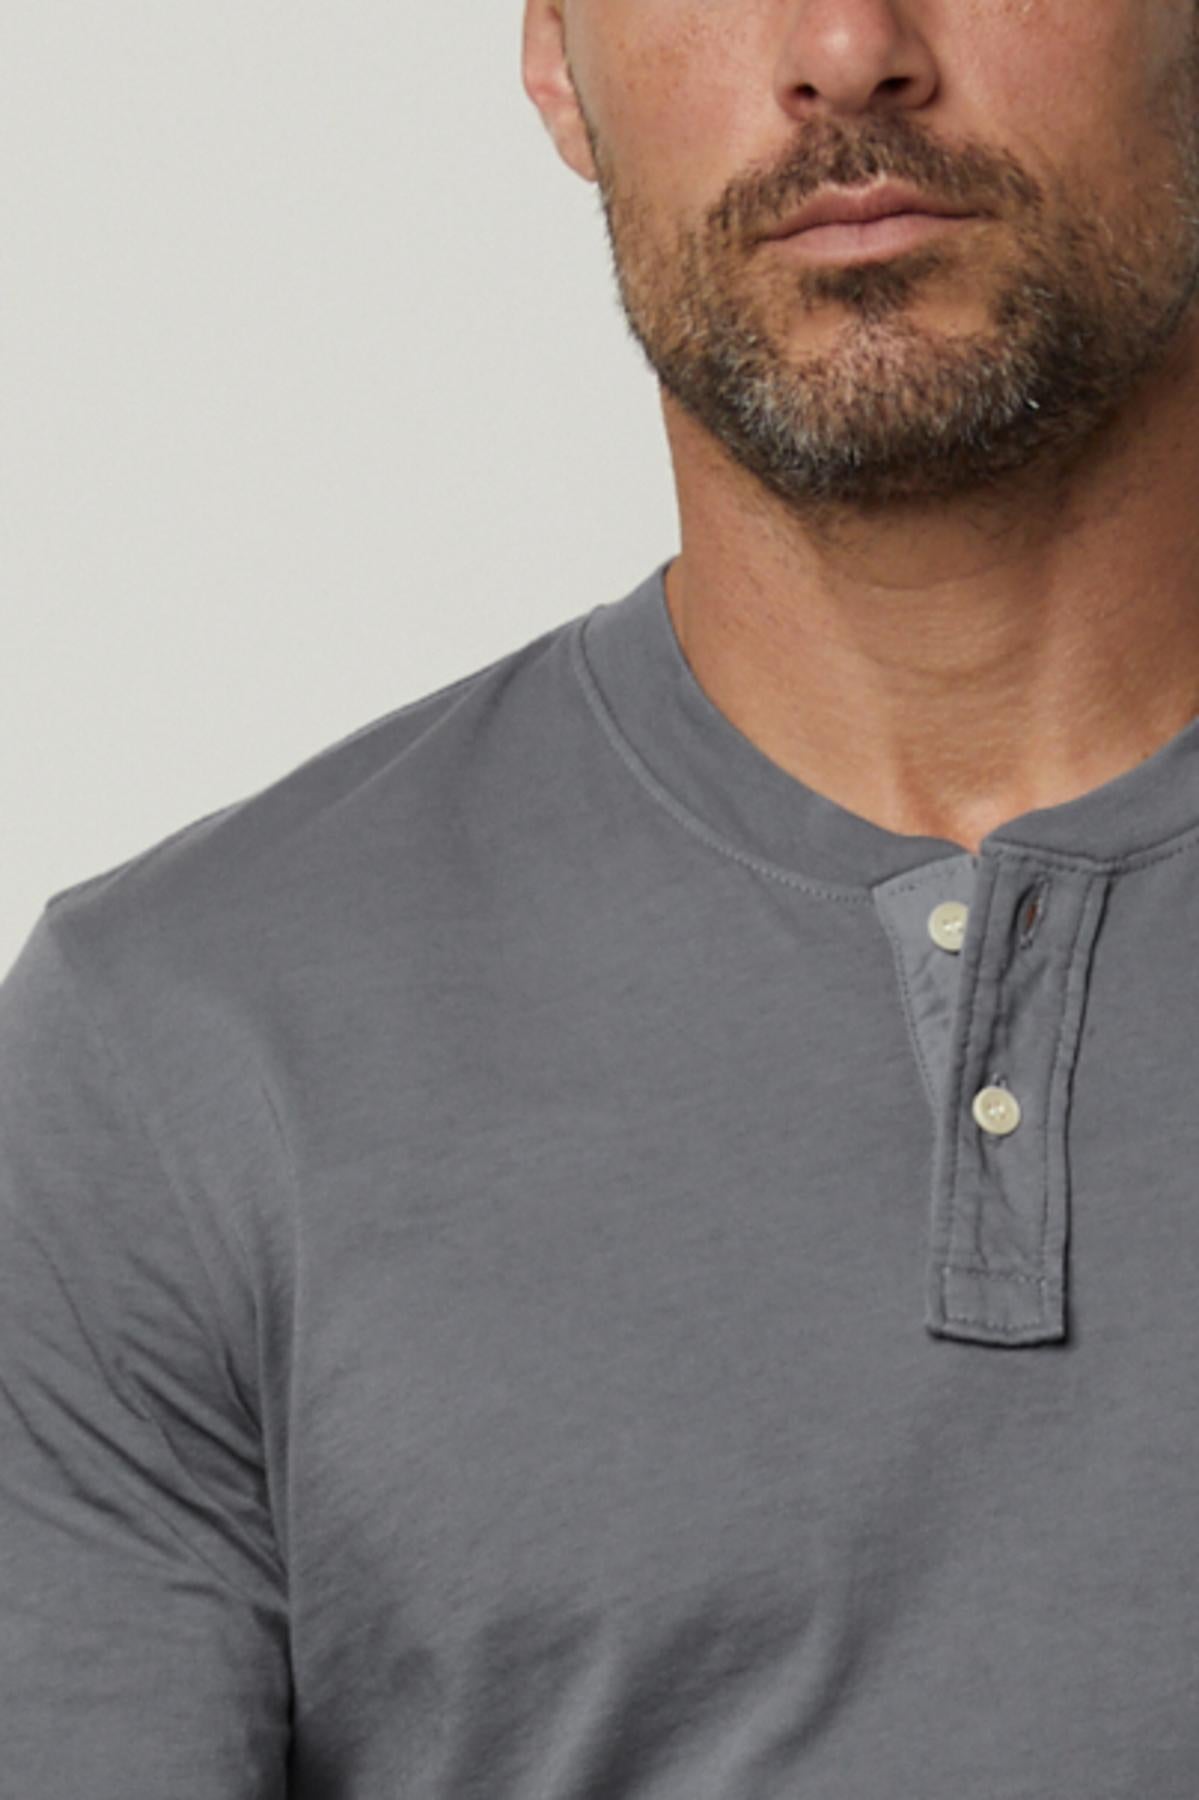 A man in a versatile grey BRADEN HENLEY shirt by Velvet by Graham & Spencer made of cotton fabric.-35782157762753